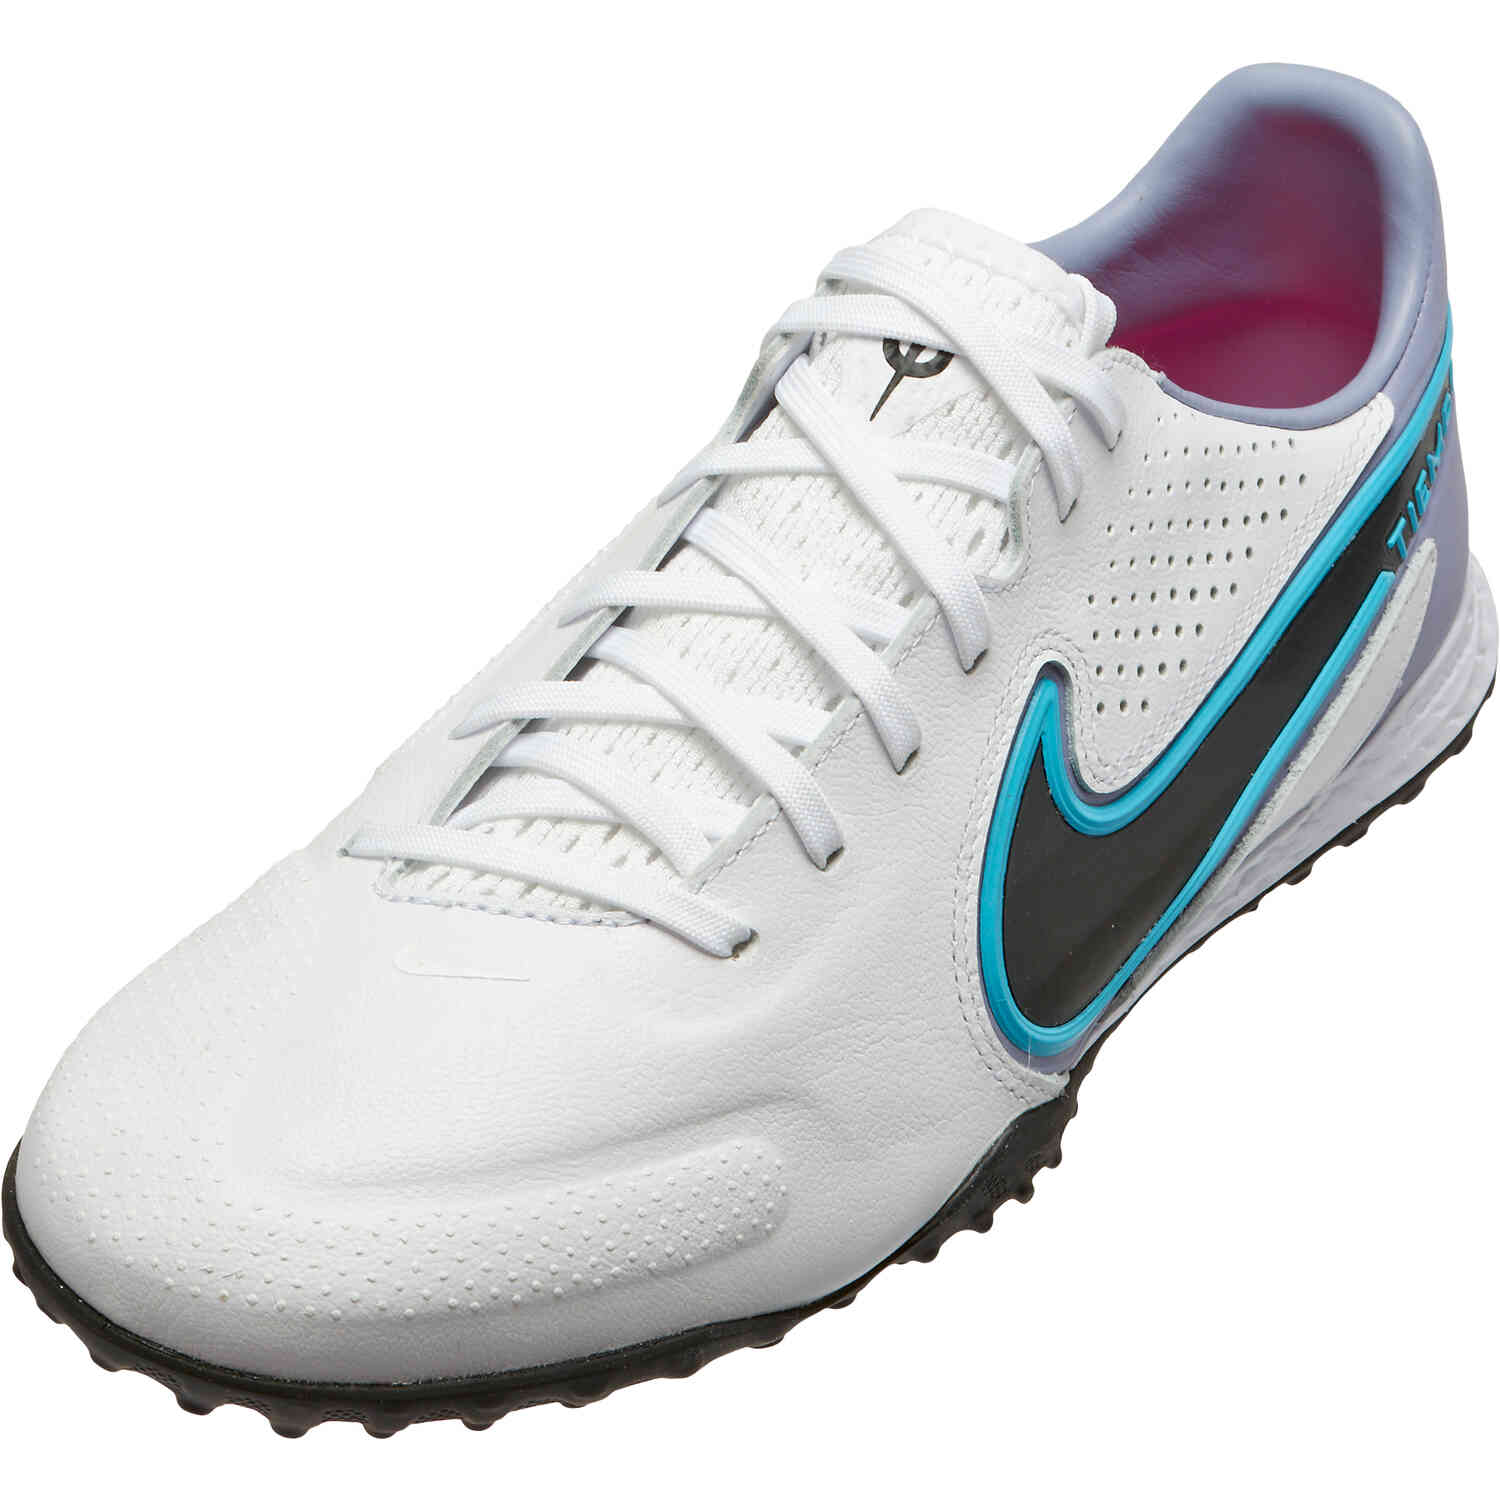 Nike Tiempo Legend TF Turf Soccer Shoes - White, Baltic Blue, Pink Blast Black - Soccer Master